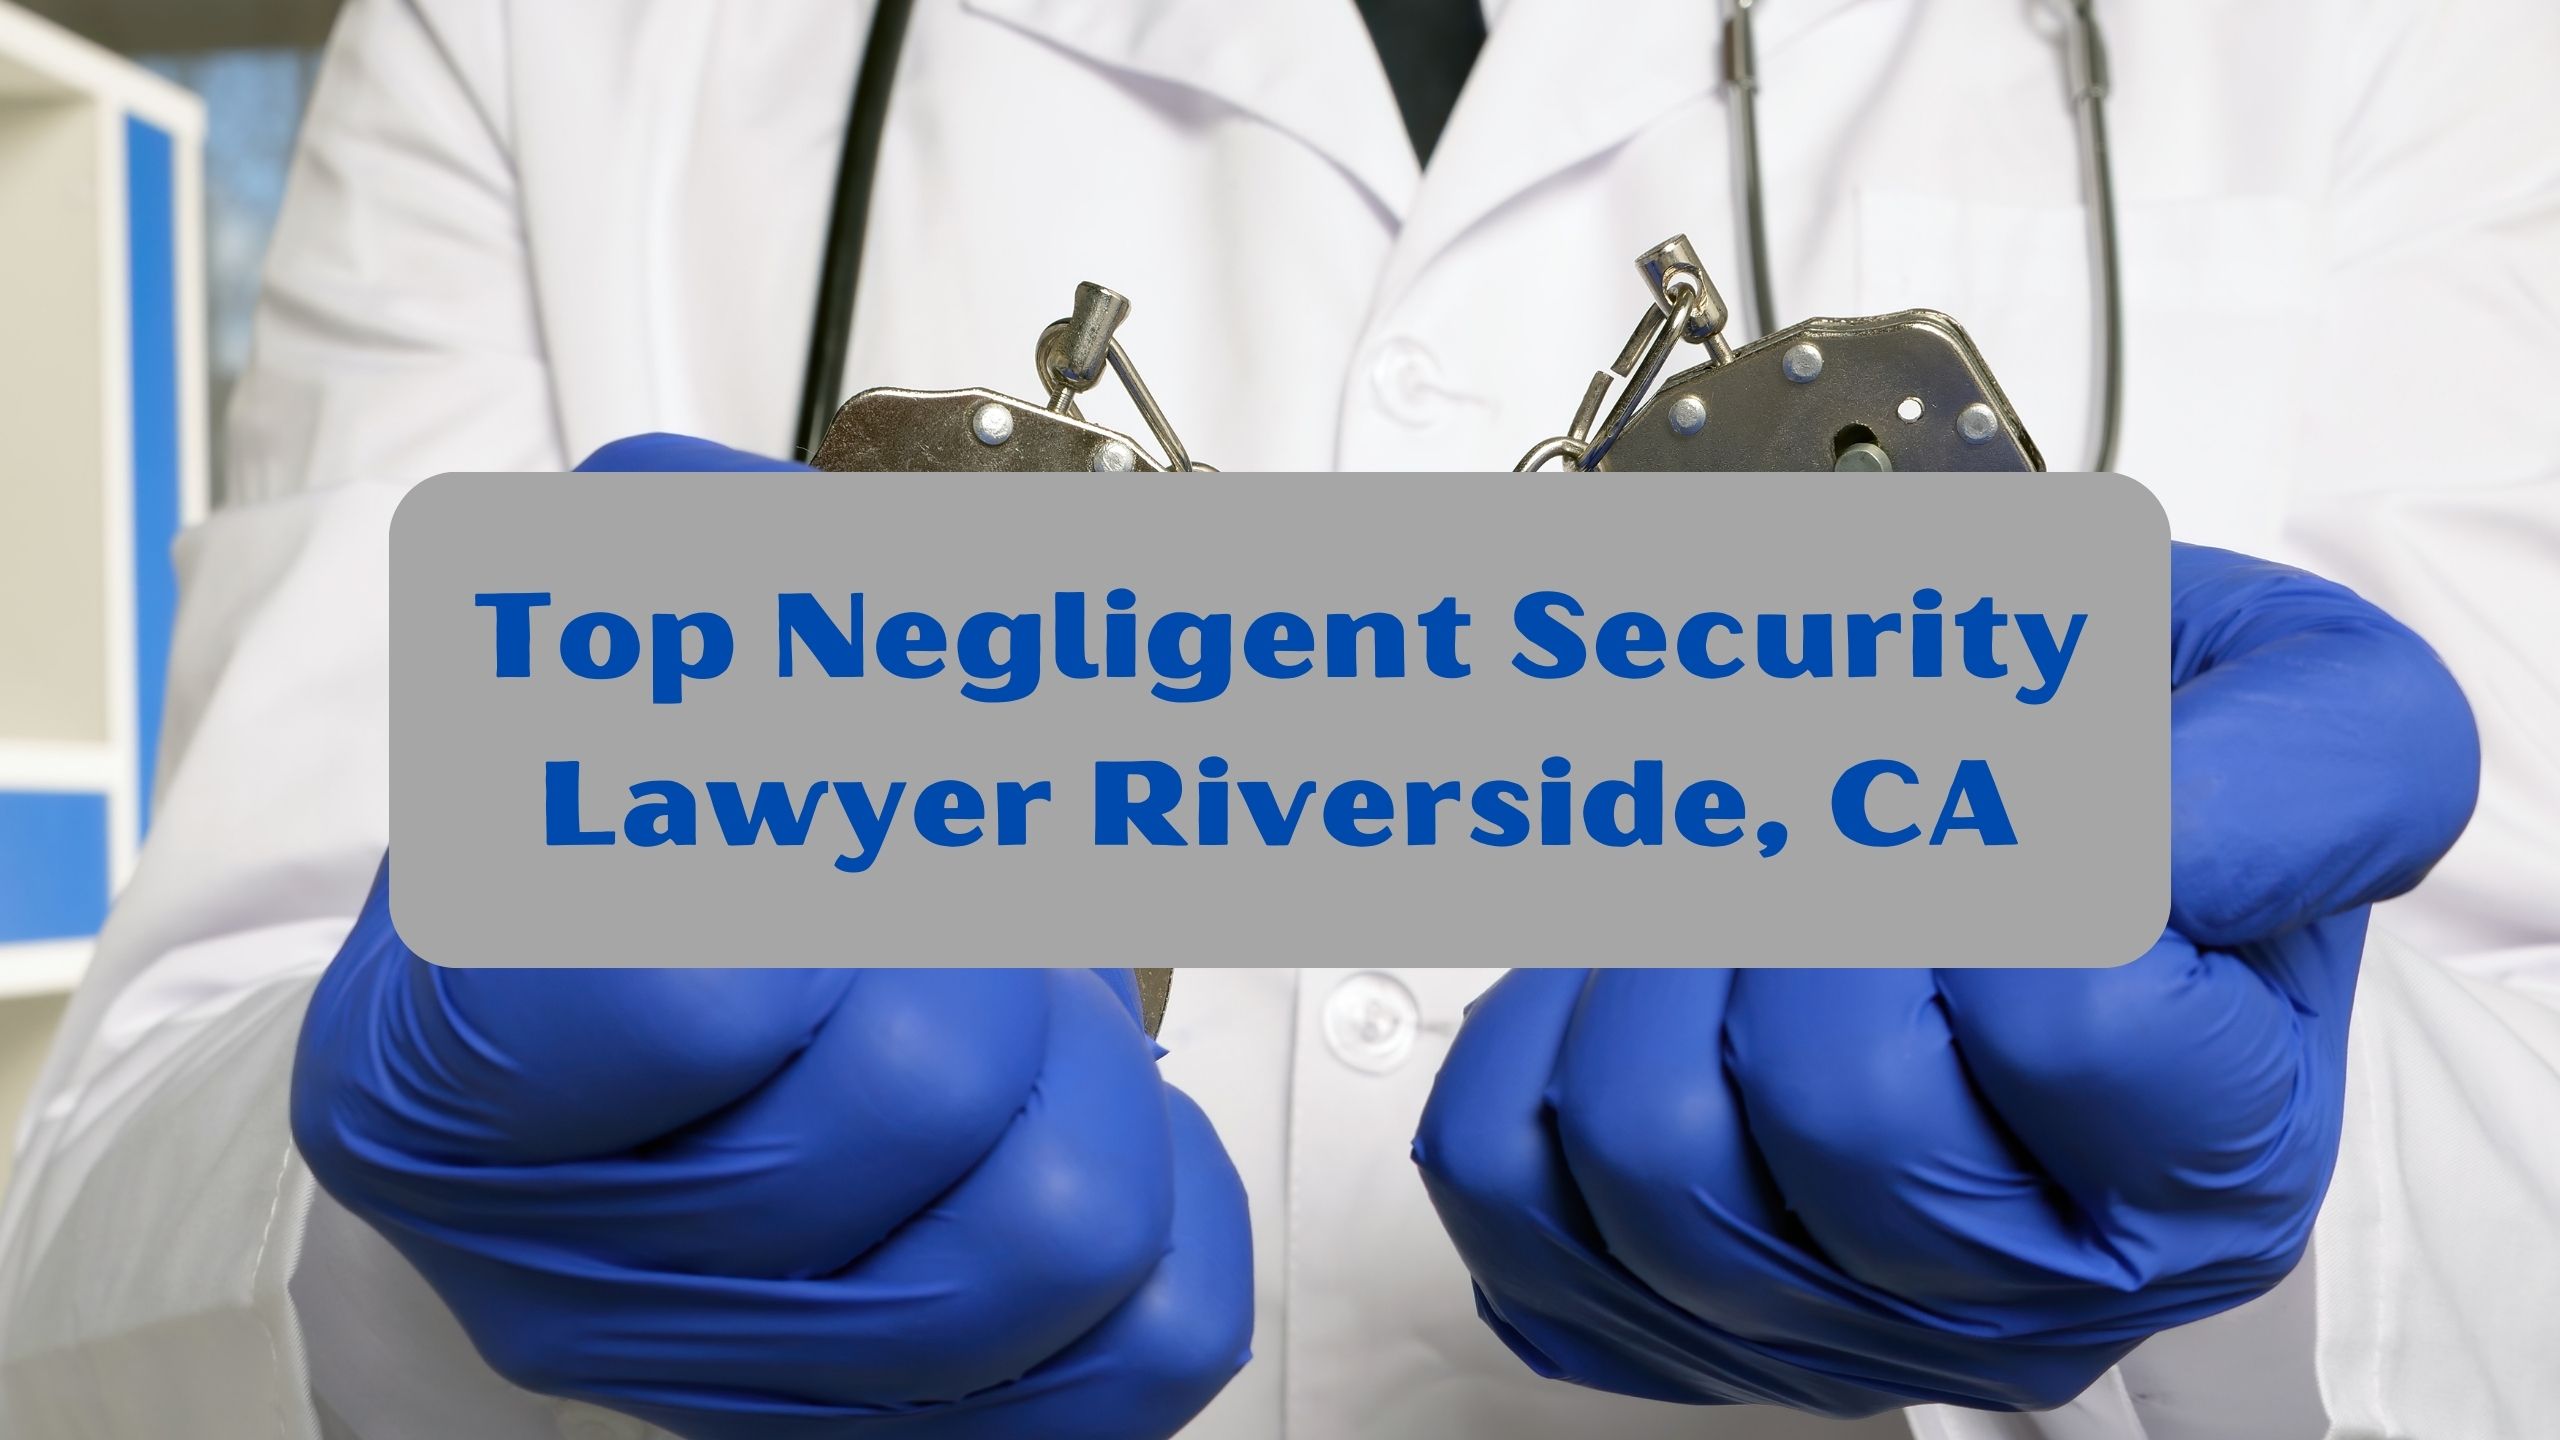 Top Negligent Security Lawyer Riverside